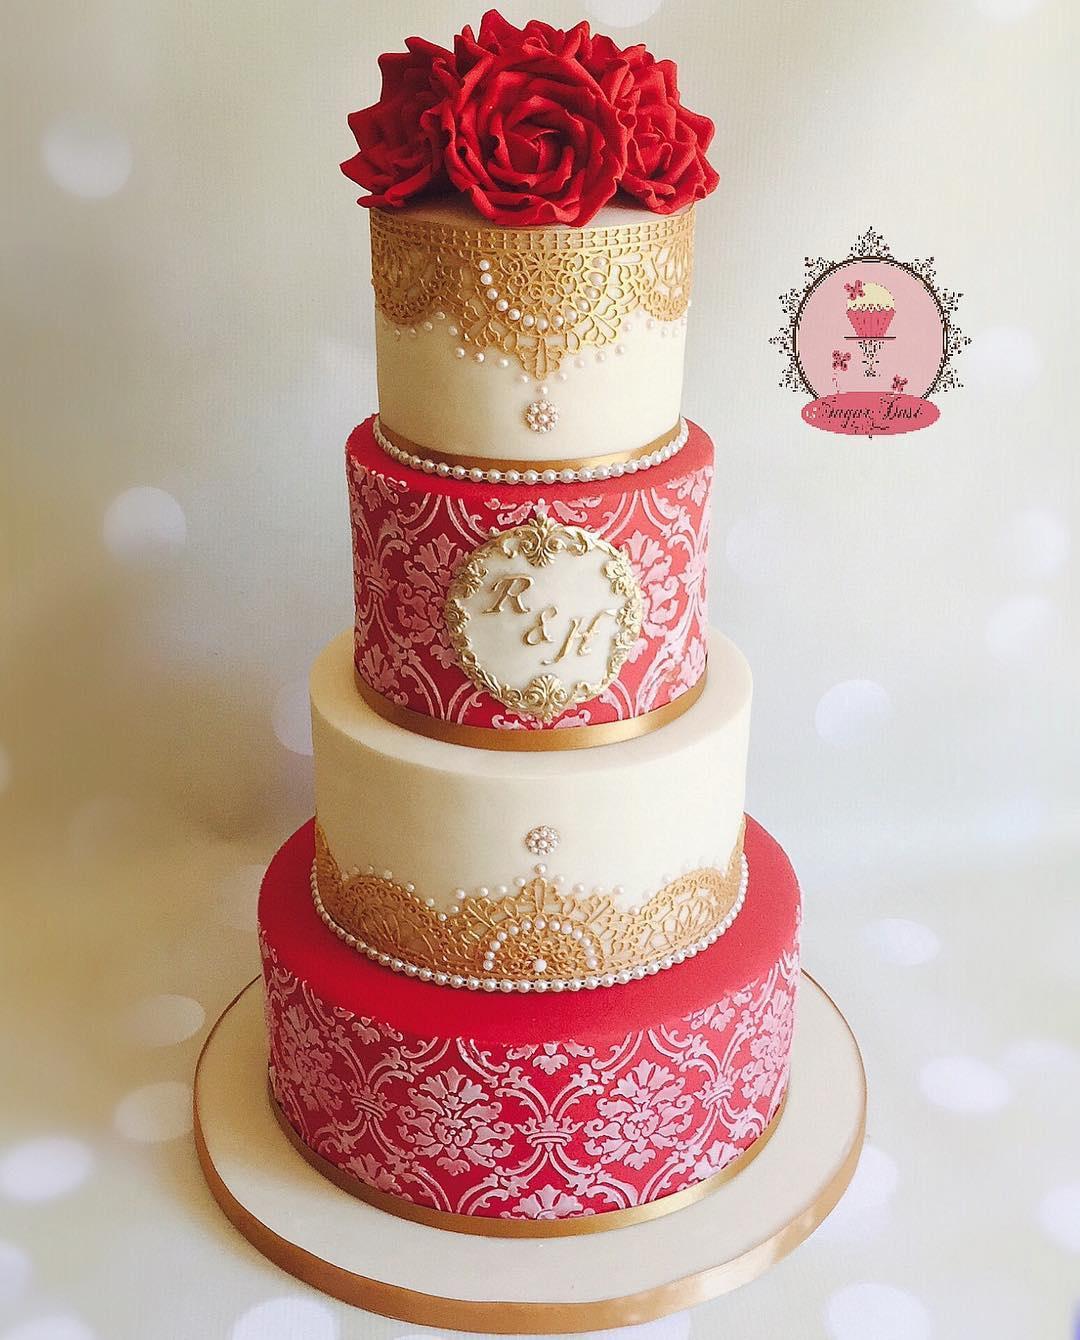 Indian wedding cake (dupatta) | Colorful birthday cake, Indian wedding cakes,  Anniversary cake designs